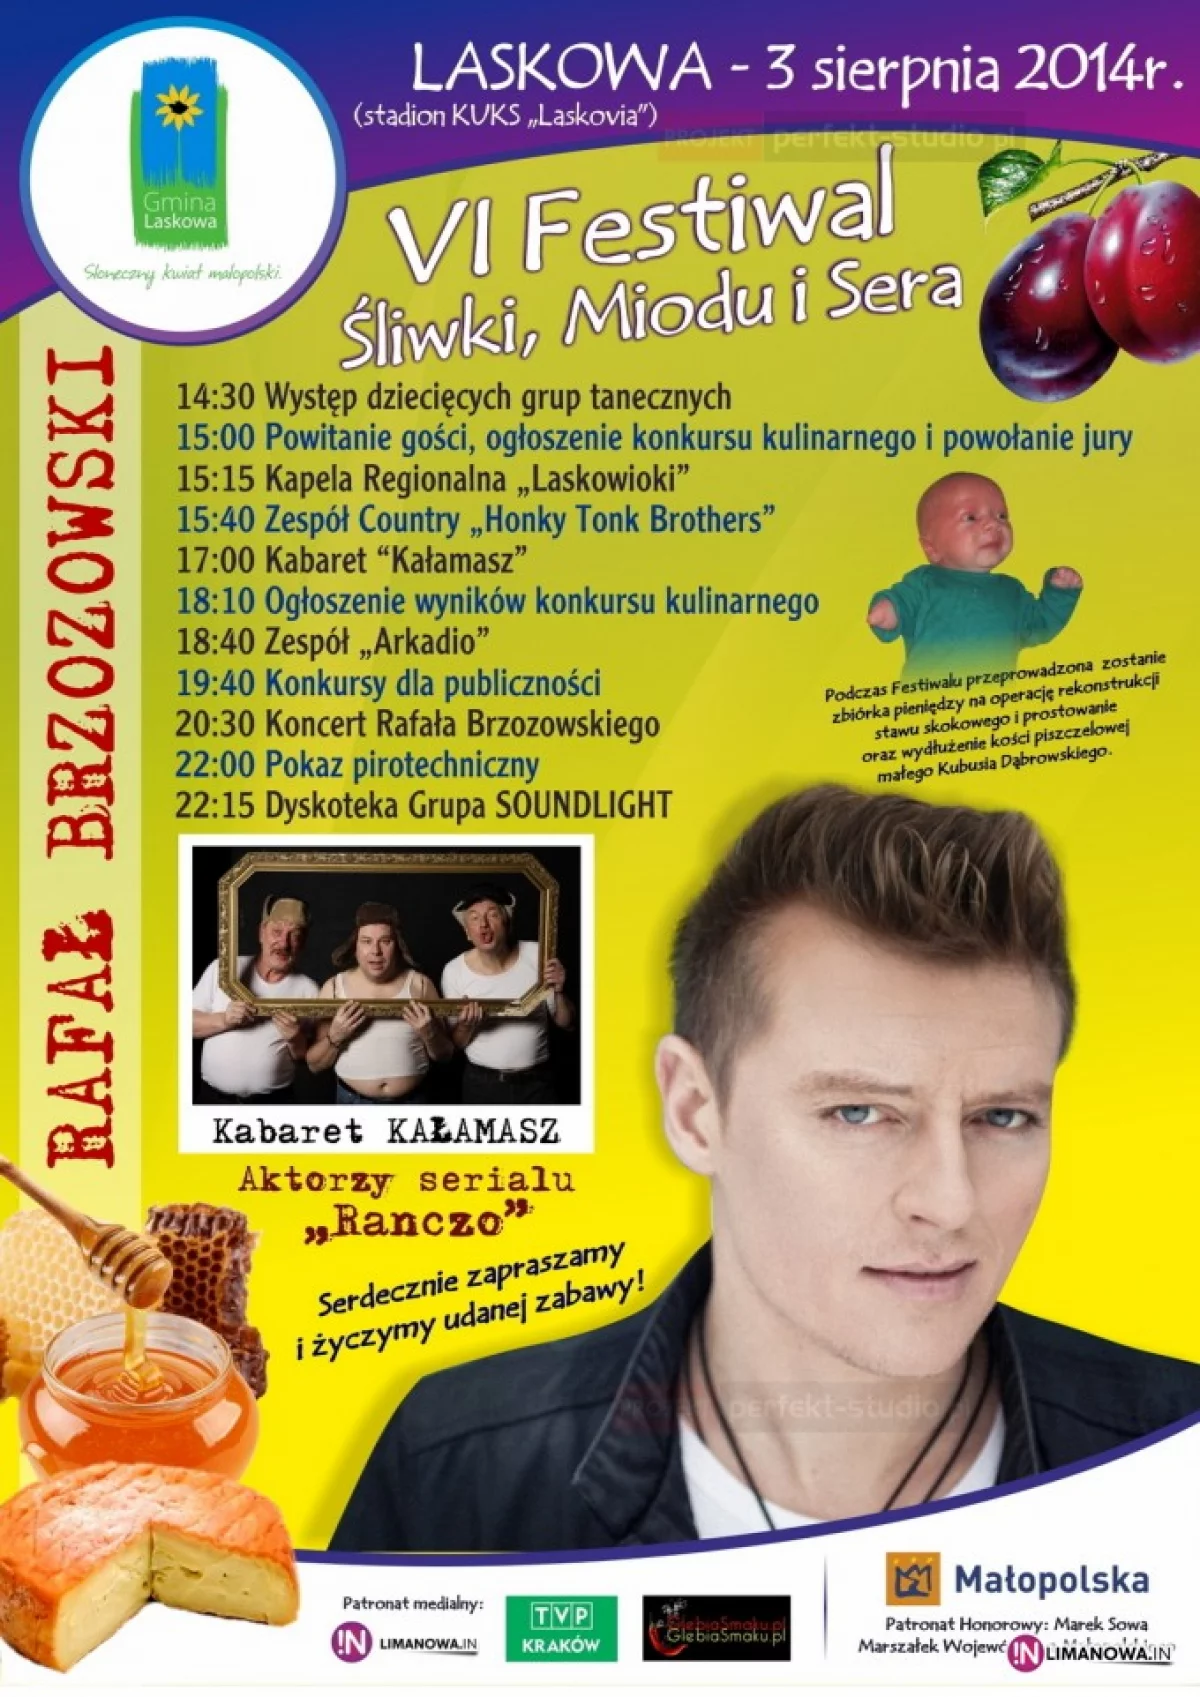 VI Festiwal Śliwki Miodu i Sera w Laskowej